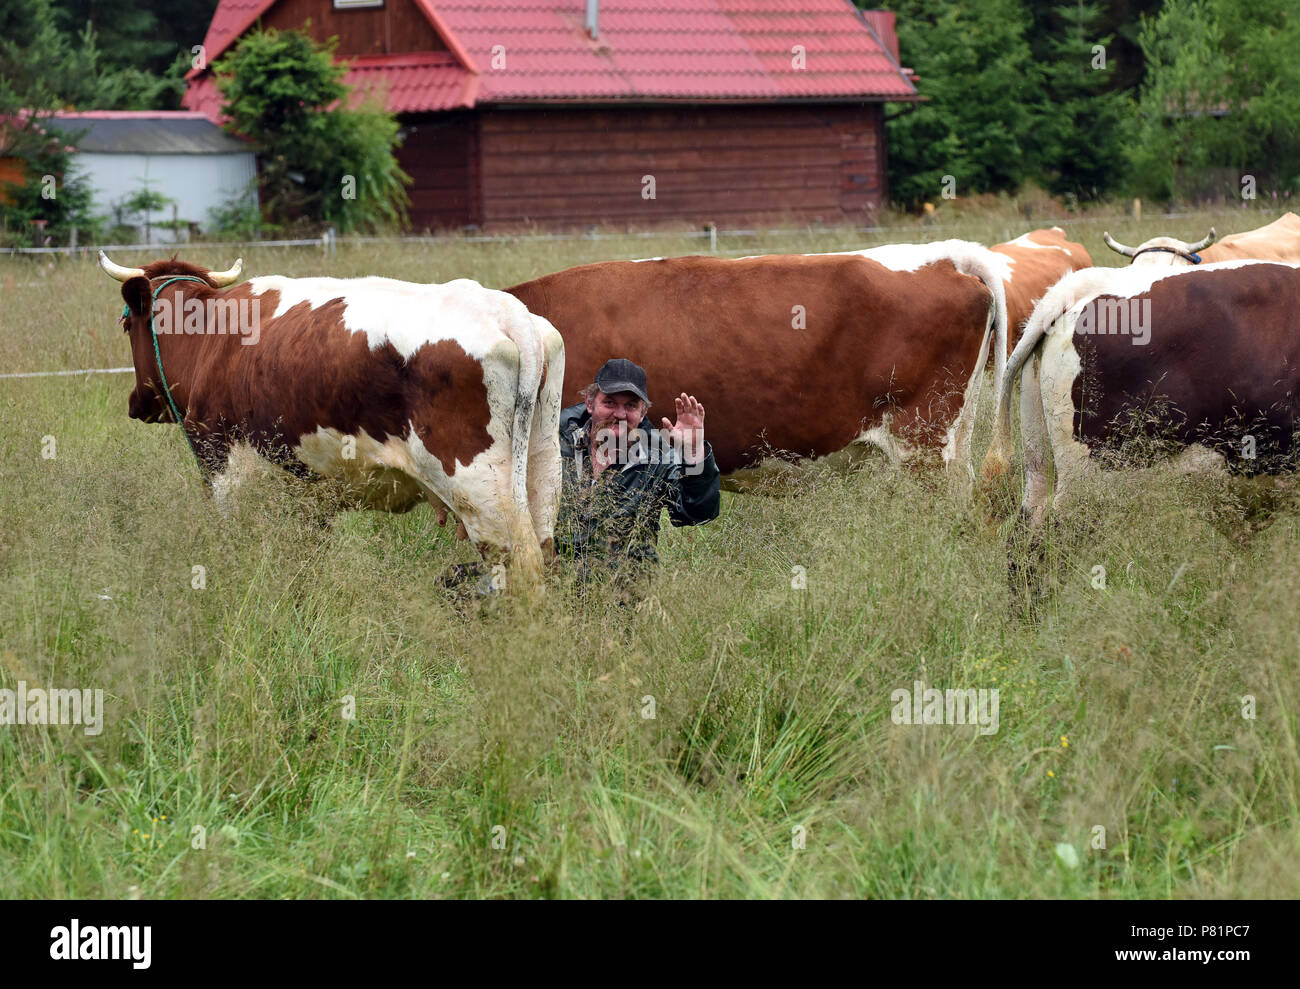 Polish dairy farmers milking cows by hand in the viillage Witow, Tatra County, near Zakopane, Poland. Stock Photo